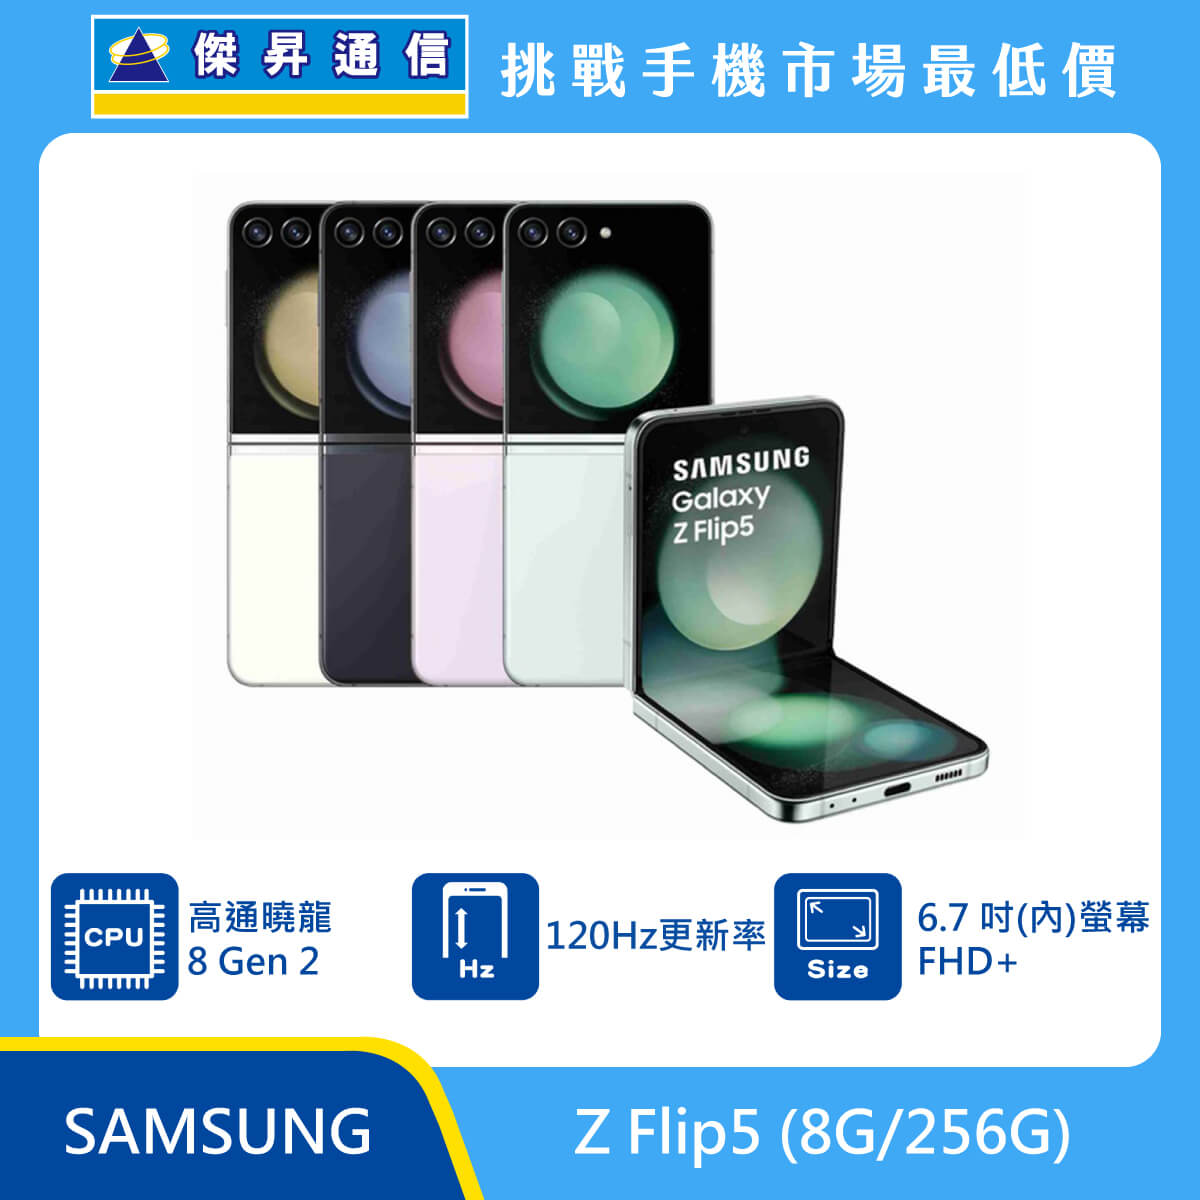 Samsung Galaxy A23 5G and A13 5G make their debut in Taiwan -   News